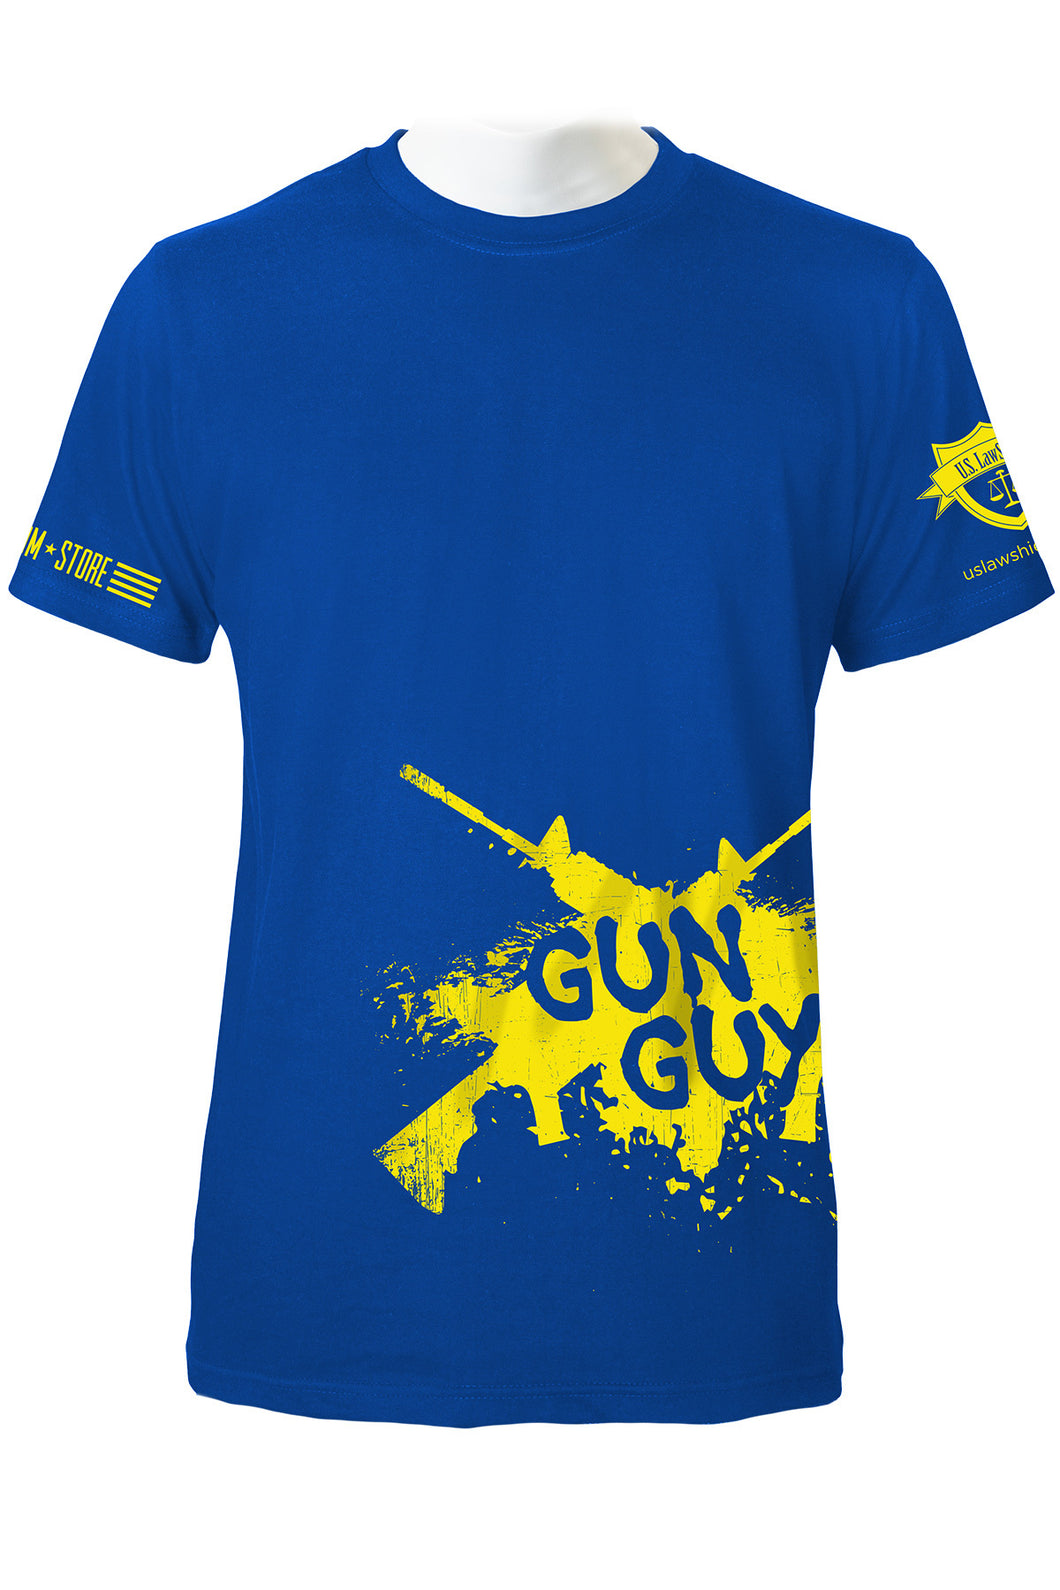 Gun Guy T-shirt by U.S. LawShield